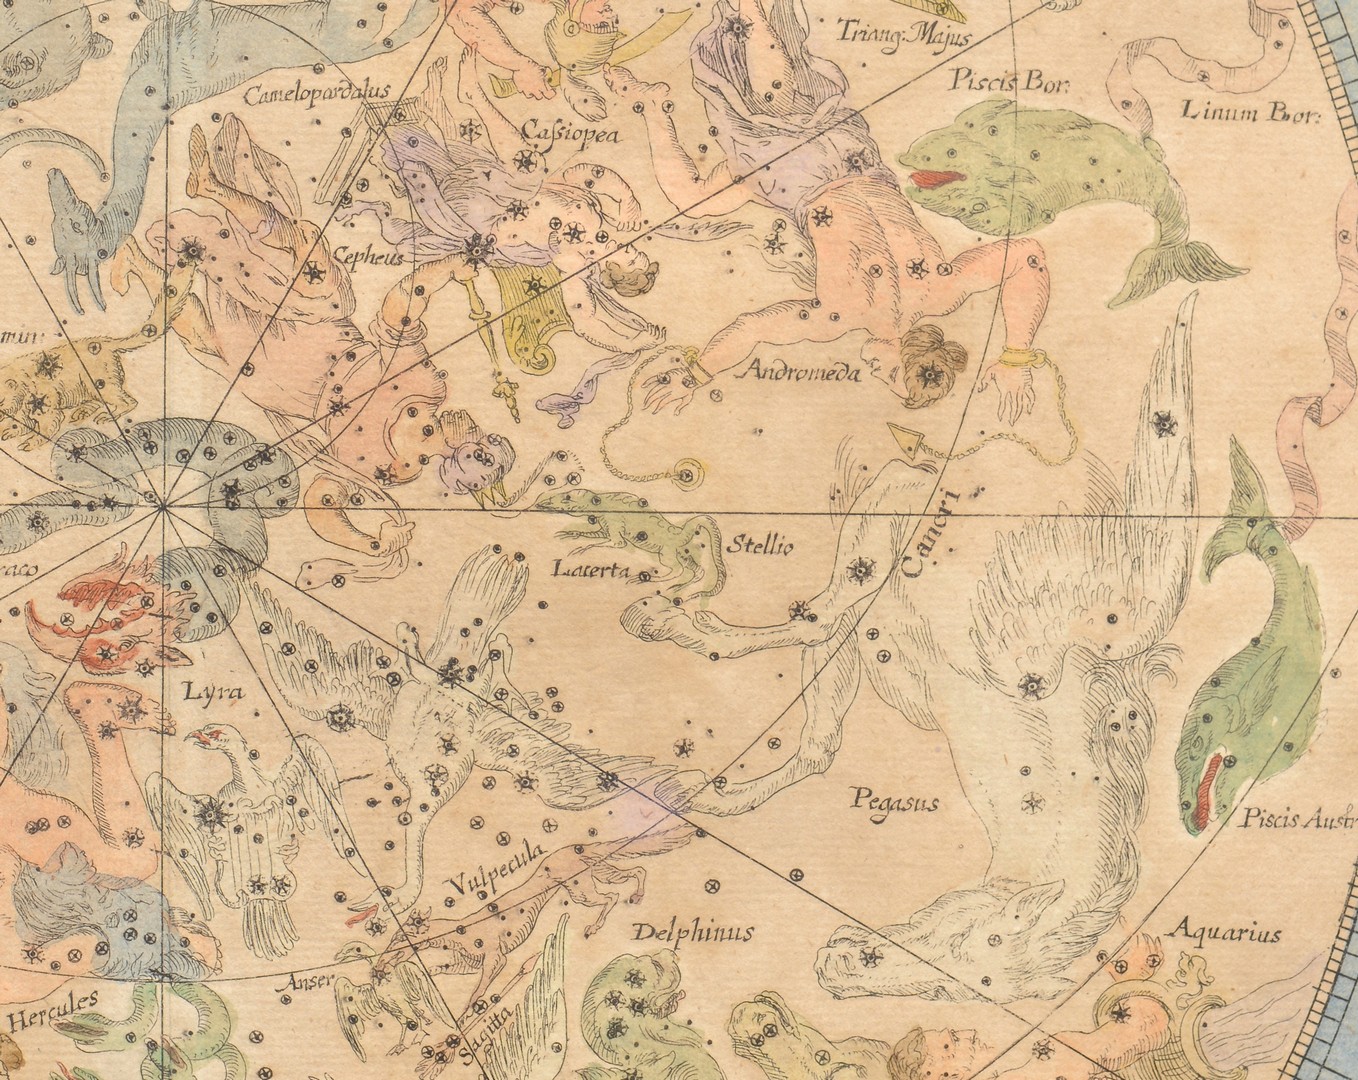 Lot 241: Pair of Baroque Celestial Maps, Johann Zahn